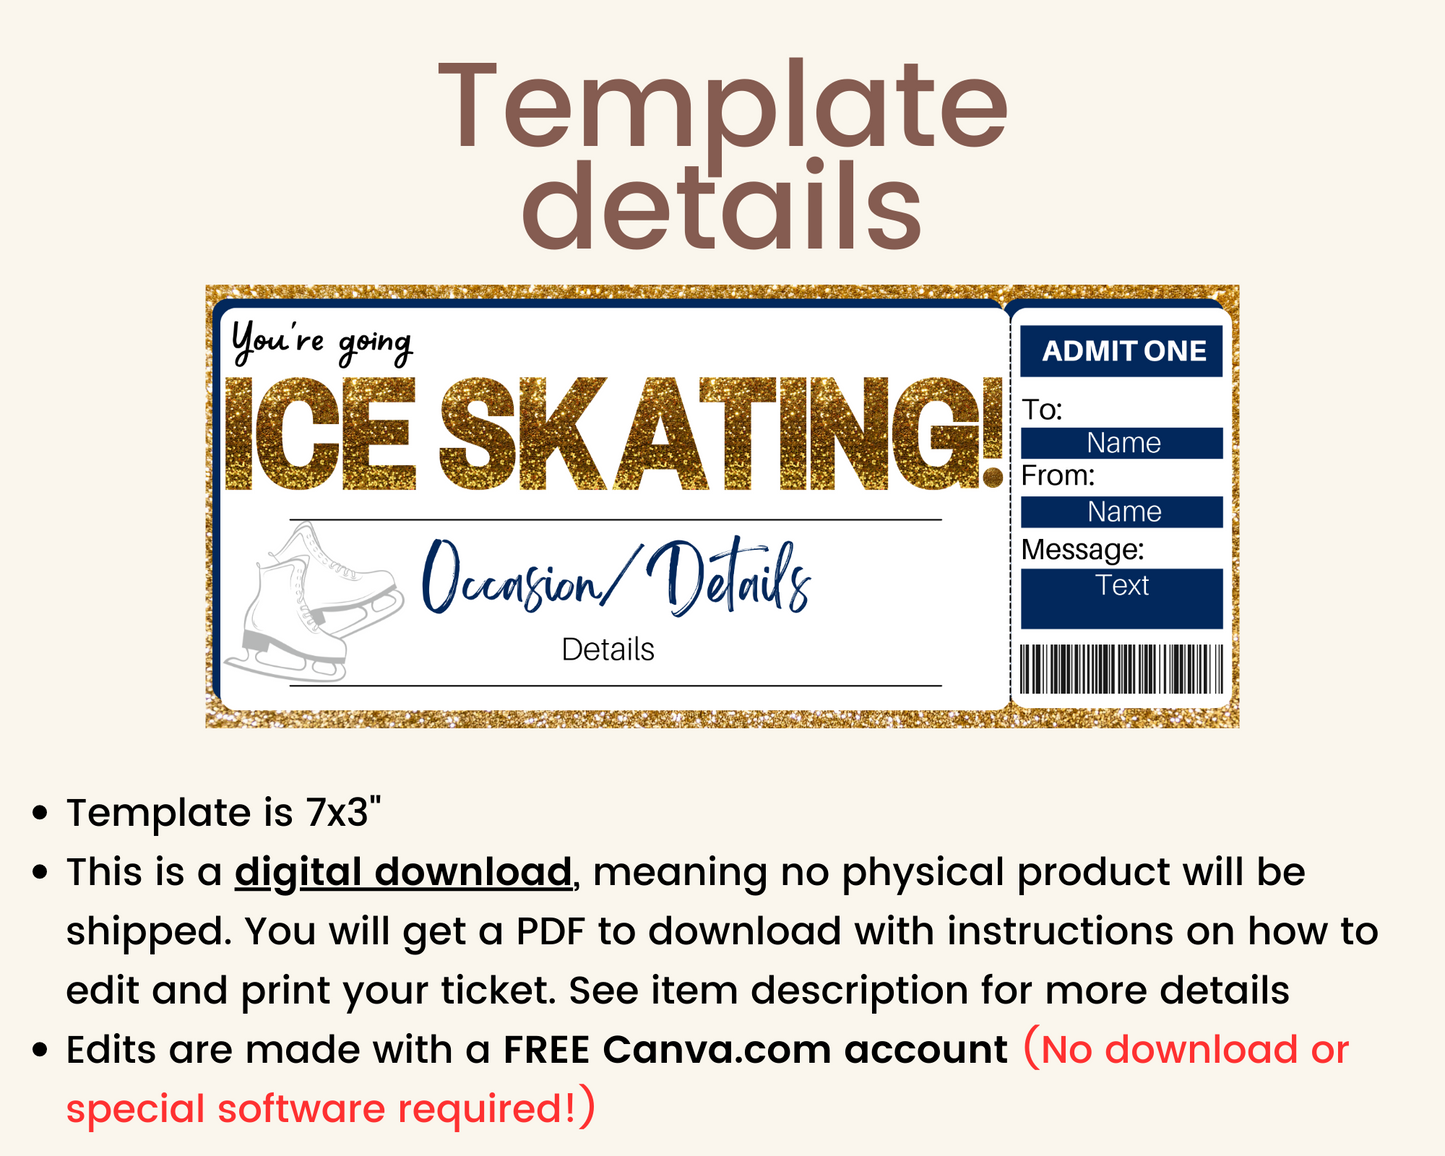 Ice Skating Gift Ticket